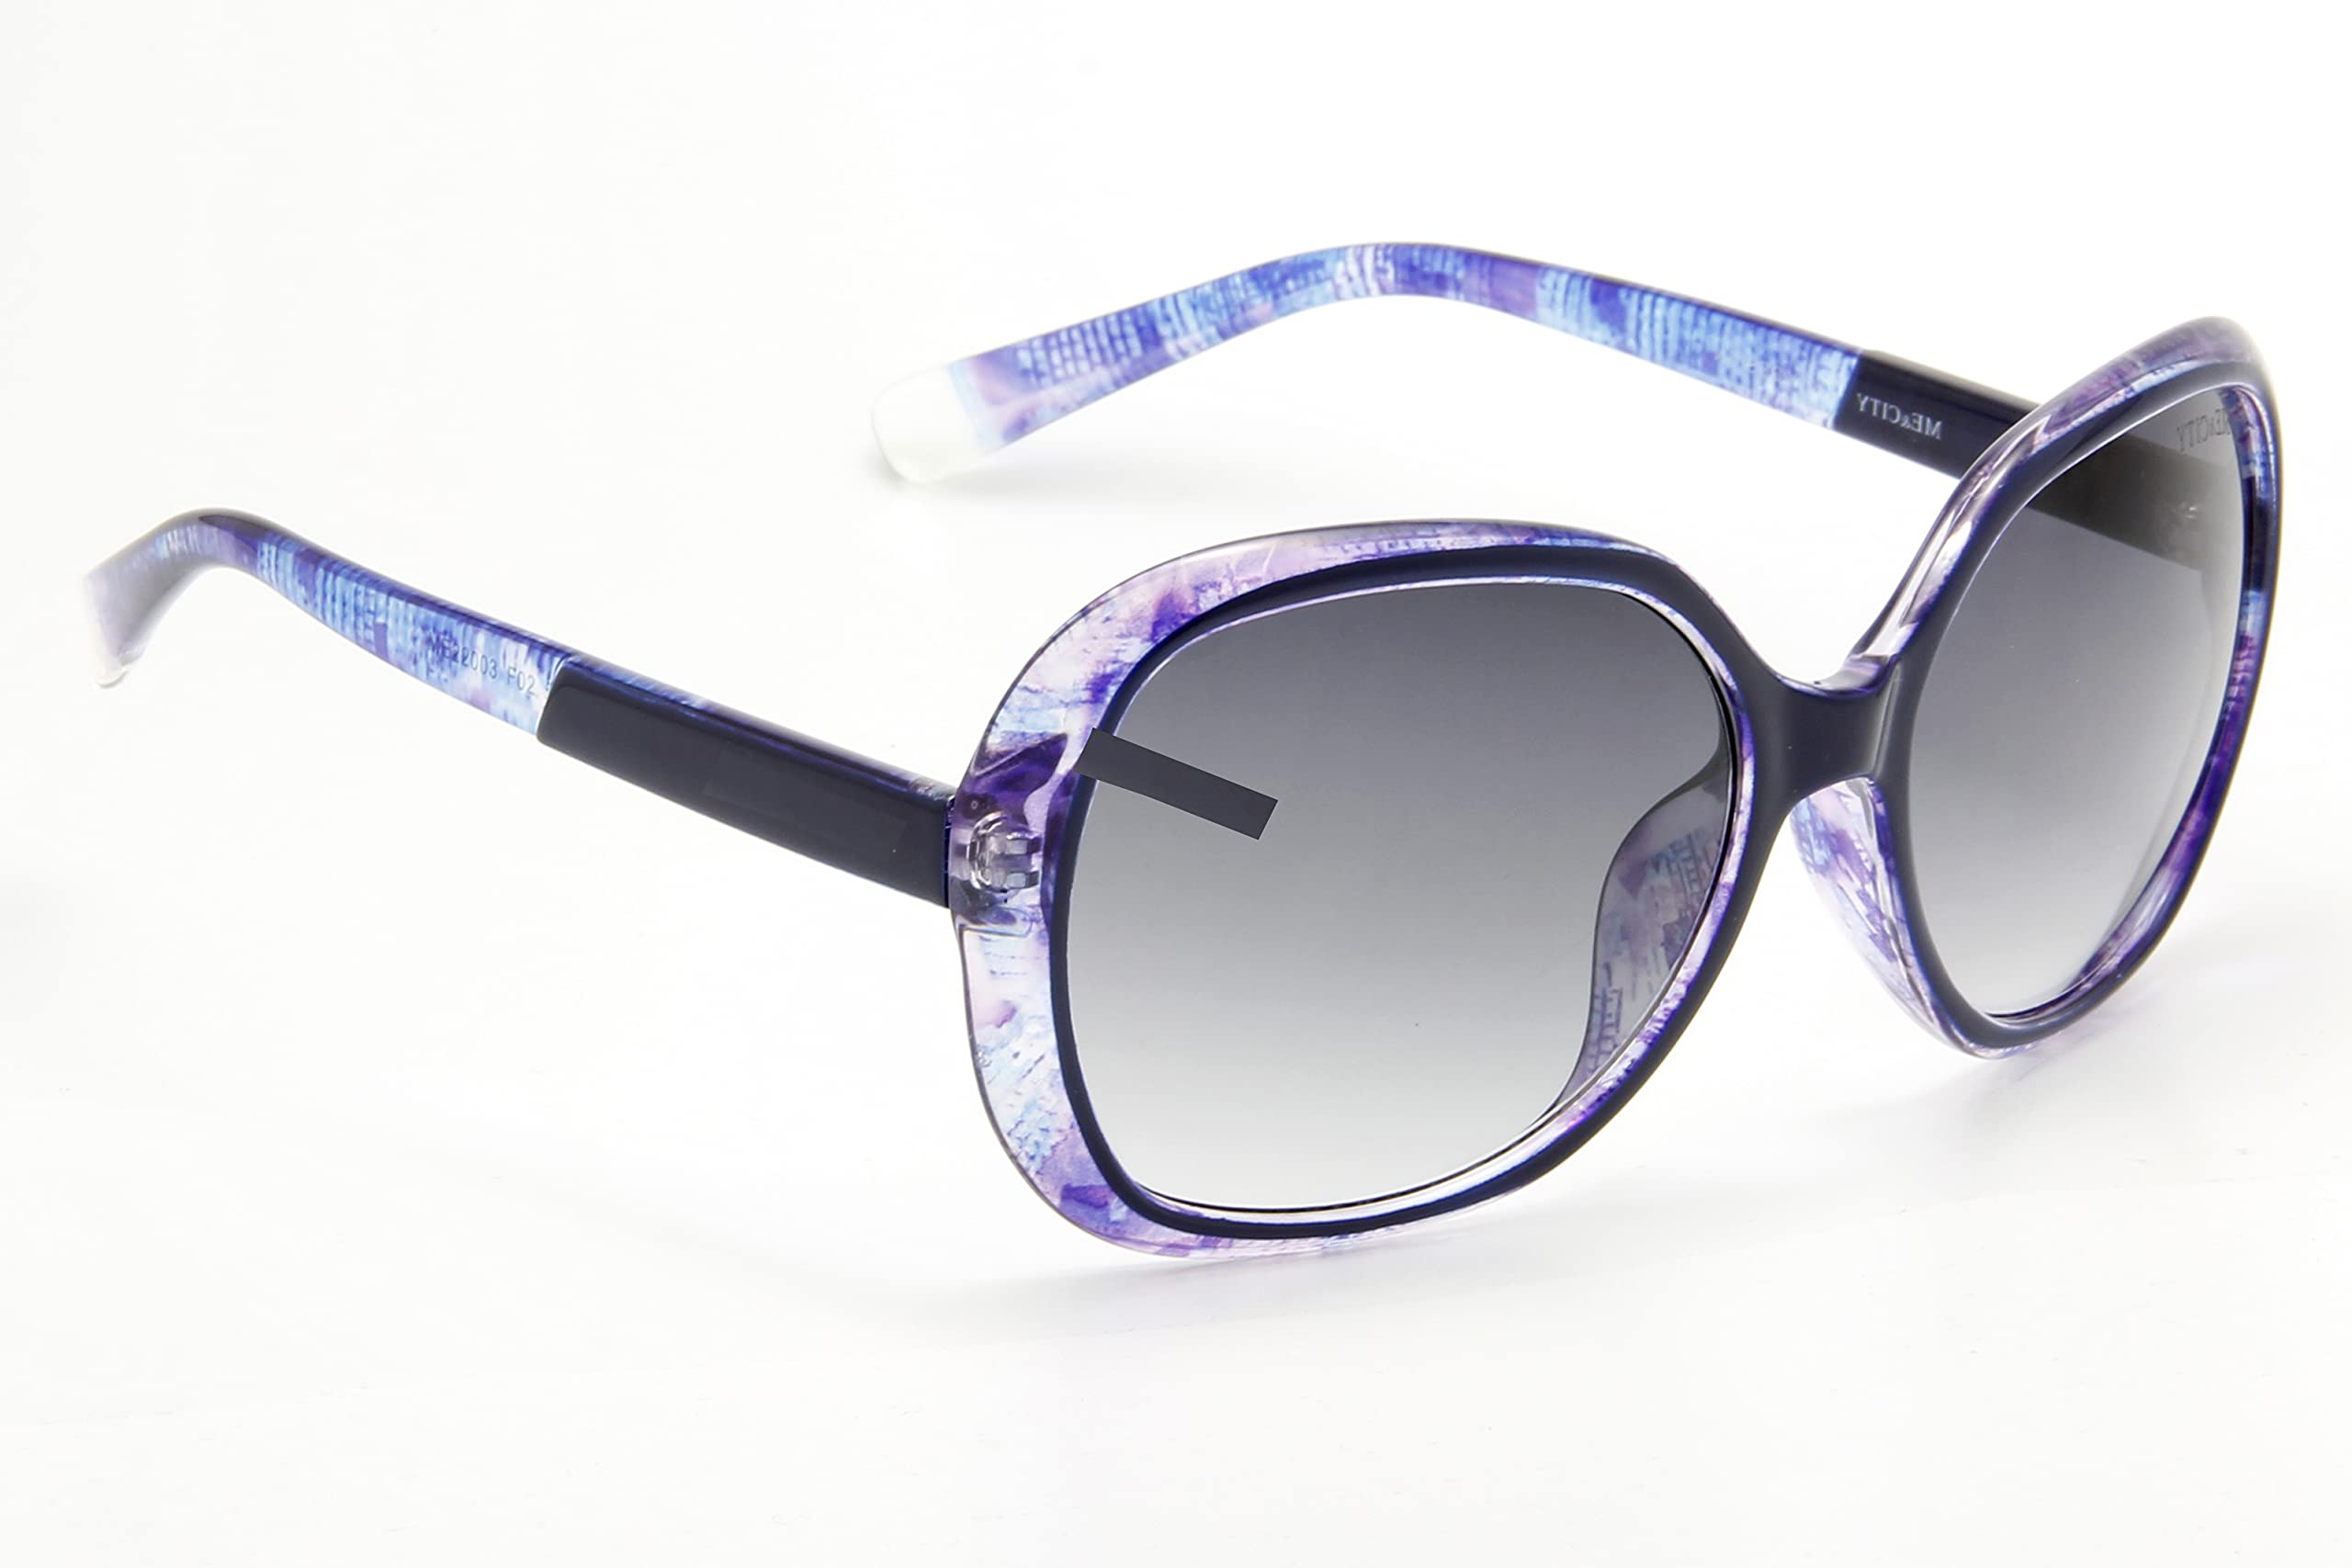 RUSHOWSHO Women Fashion Sunglasses UV Protection Outdoor Eyewear